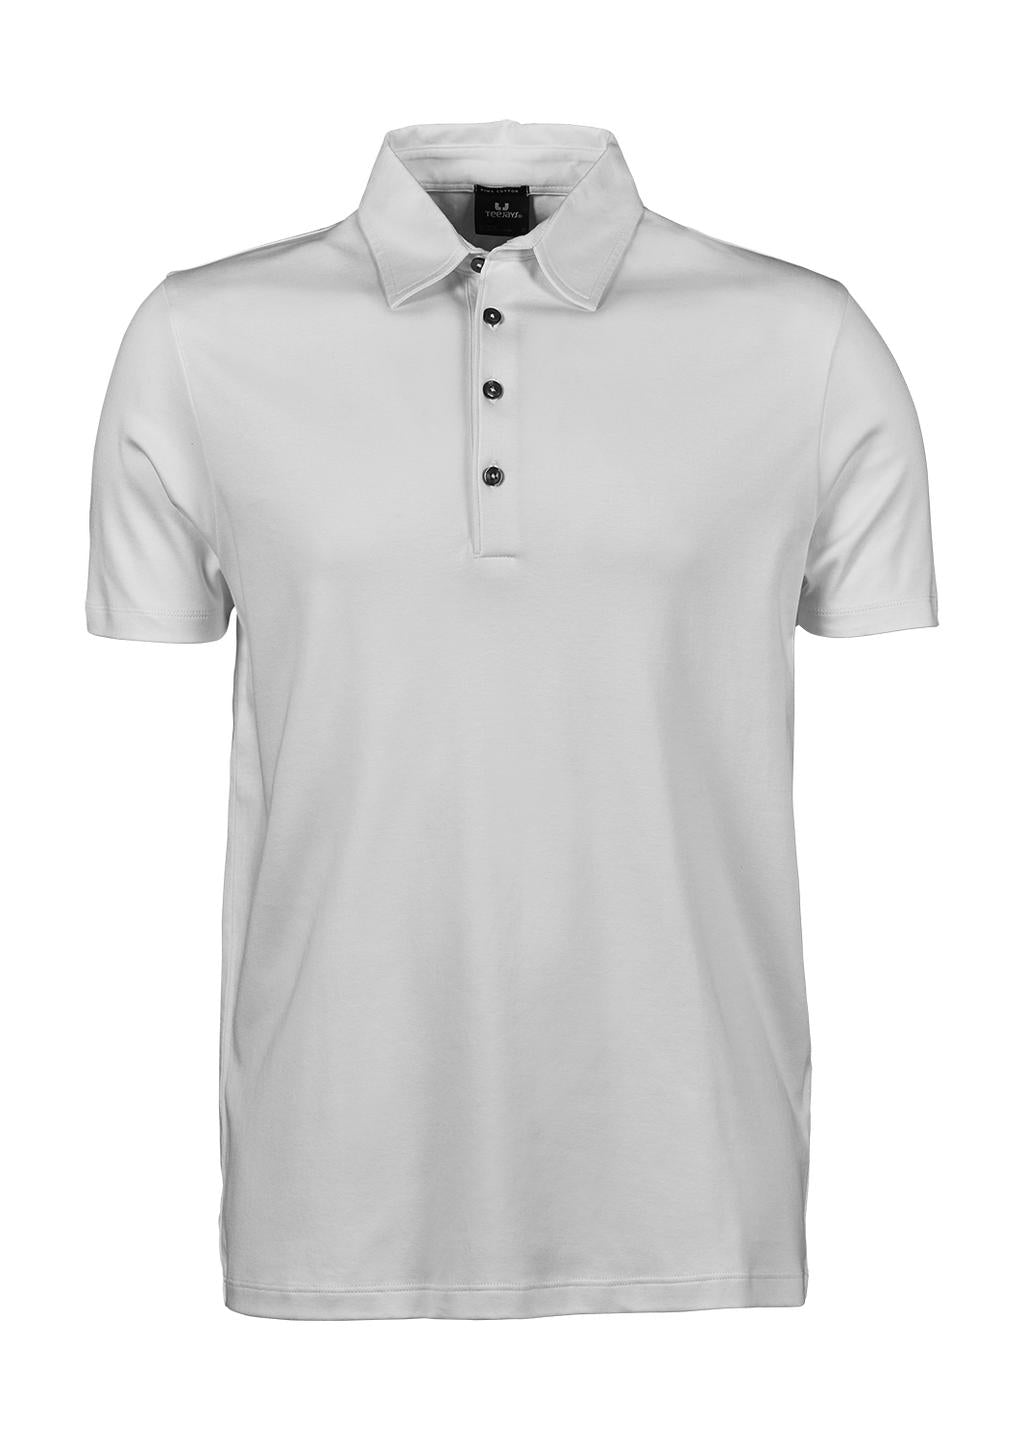 Tee Jays Herren Poloshirt Polohemd Polo Shirt T-Shirt Kurzarm Shirt